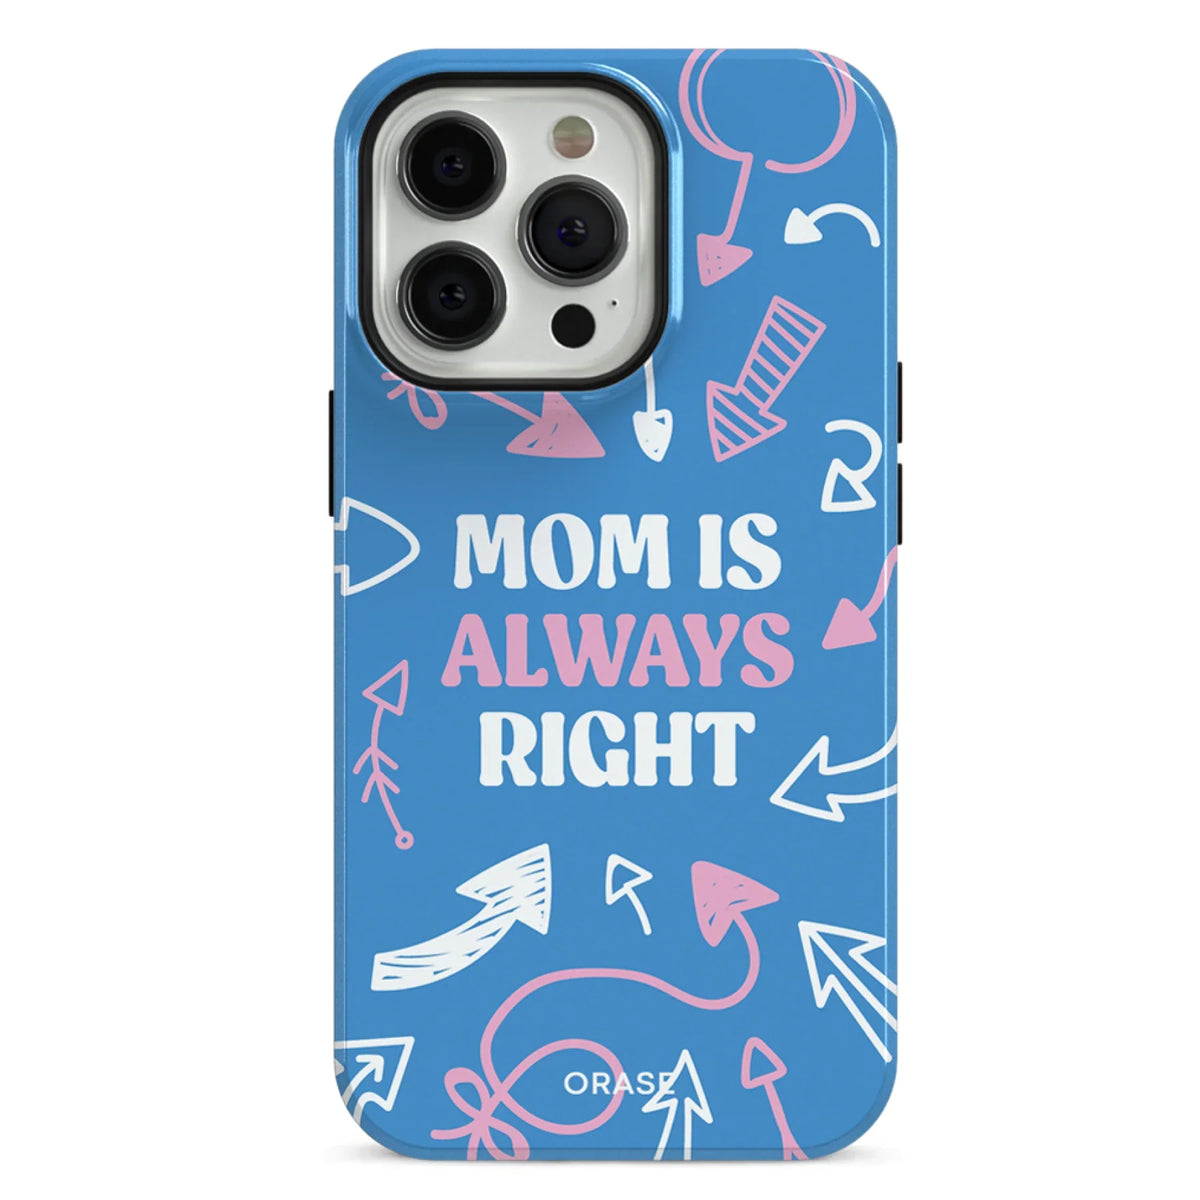 Mom Is Always Right iPhone Case - iPhone 12 Mini